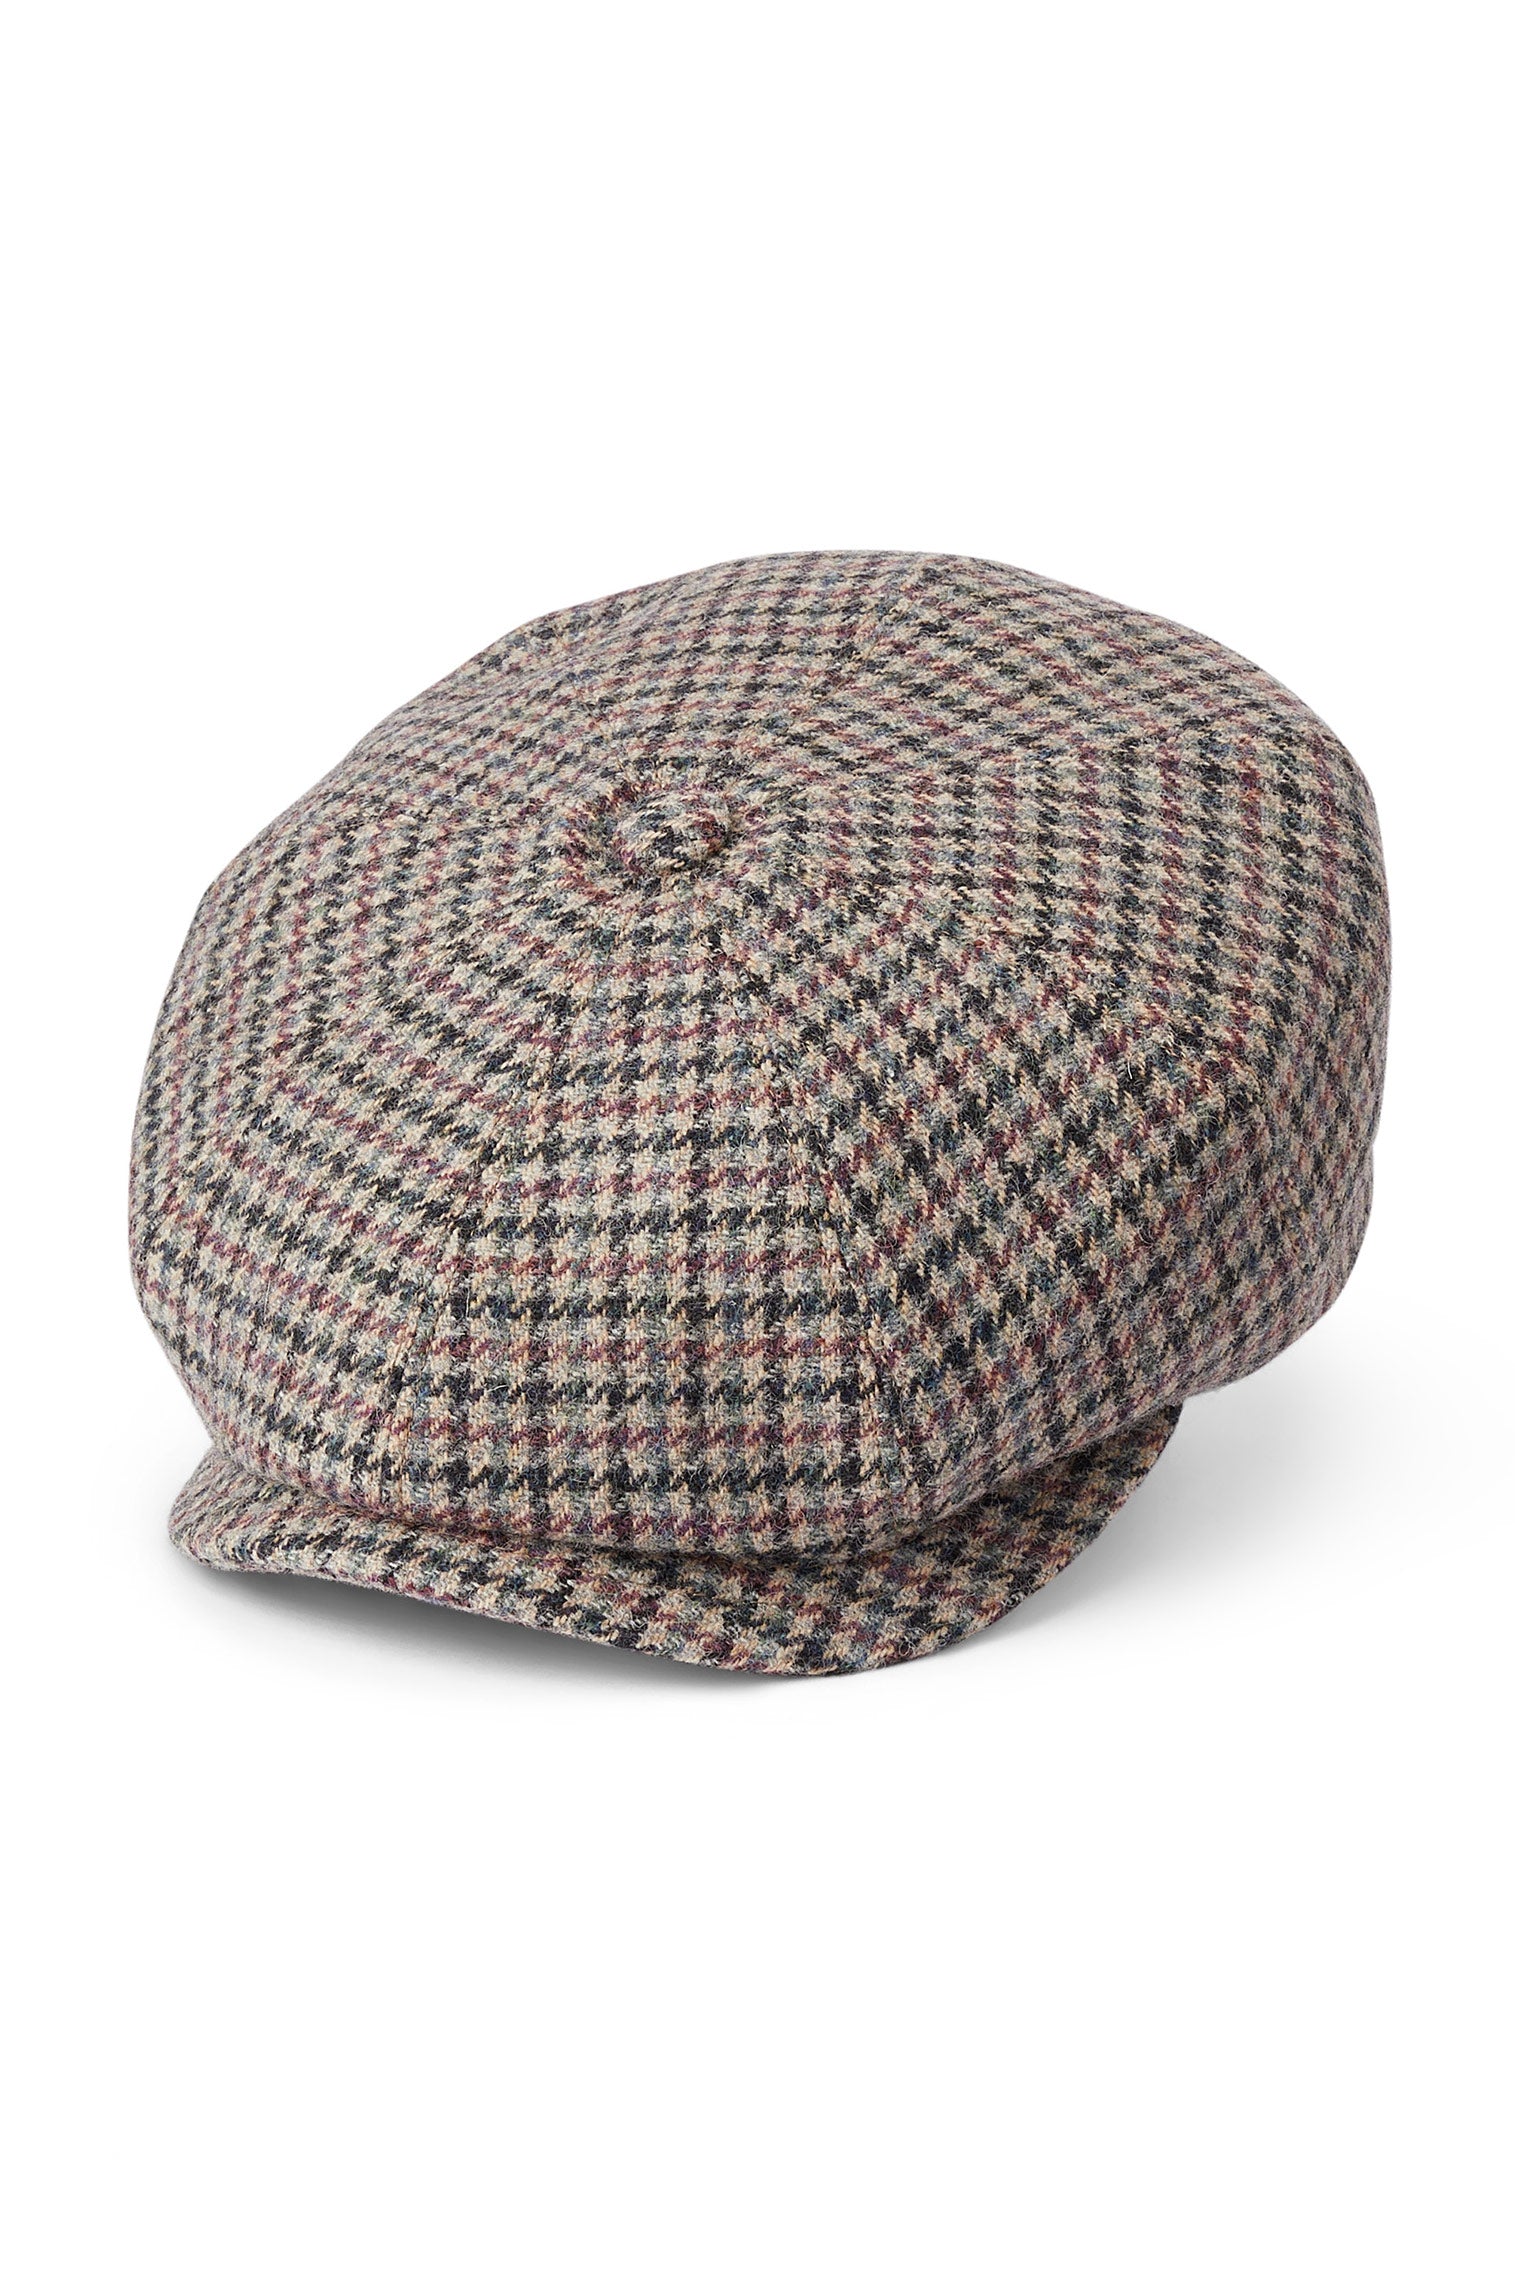 Whitebridge Mini-Check Bakerboy Cap - Hats for Tall People - Lock & Co. Hatters London UK